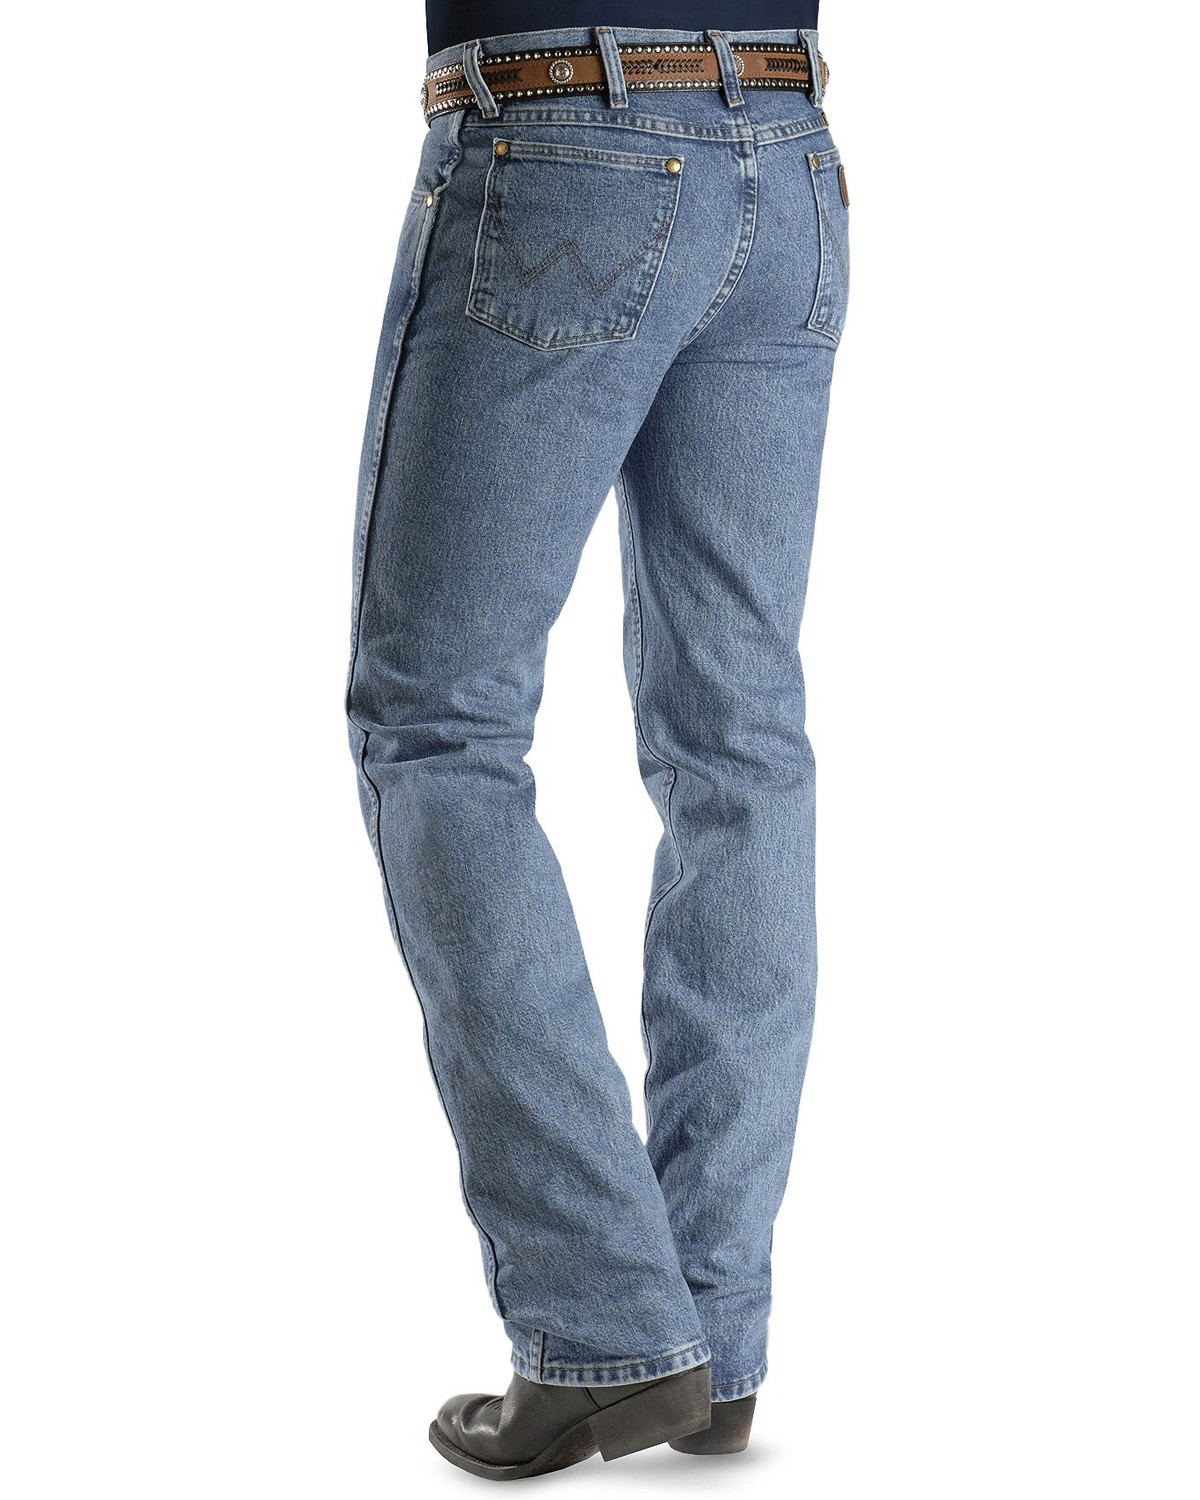 Wrangler Jeans - Cowboy Cut 36MWZ Slim Fit Jeans Stonewash | Sheplers